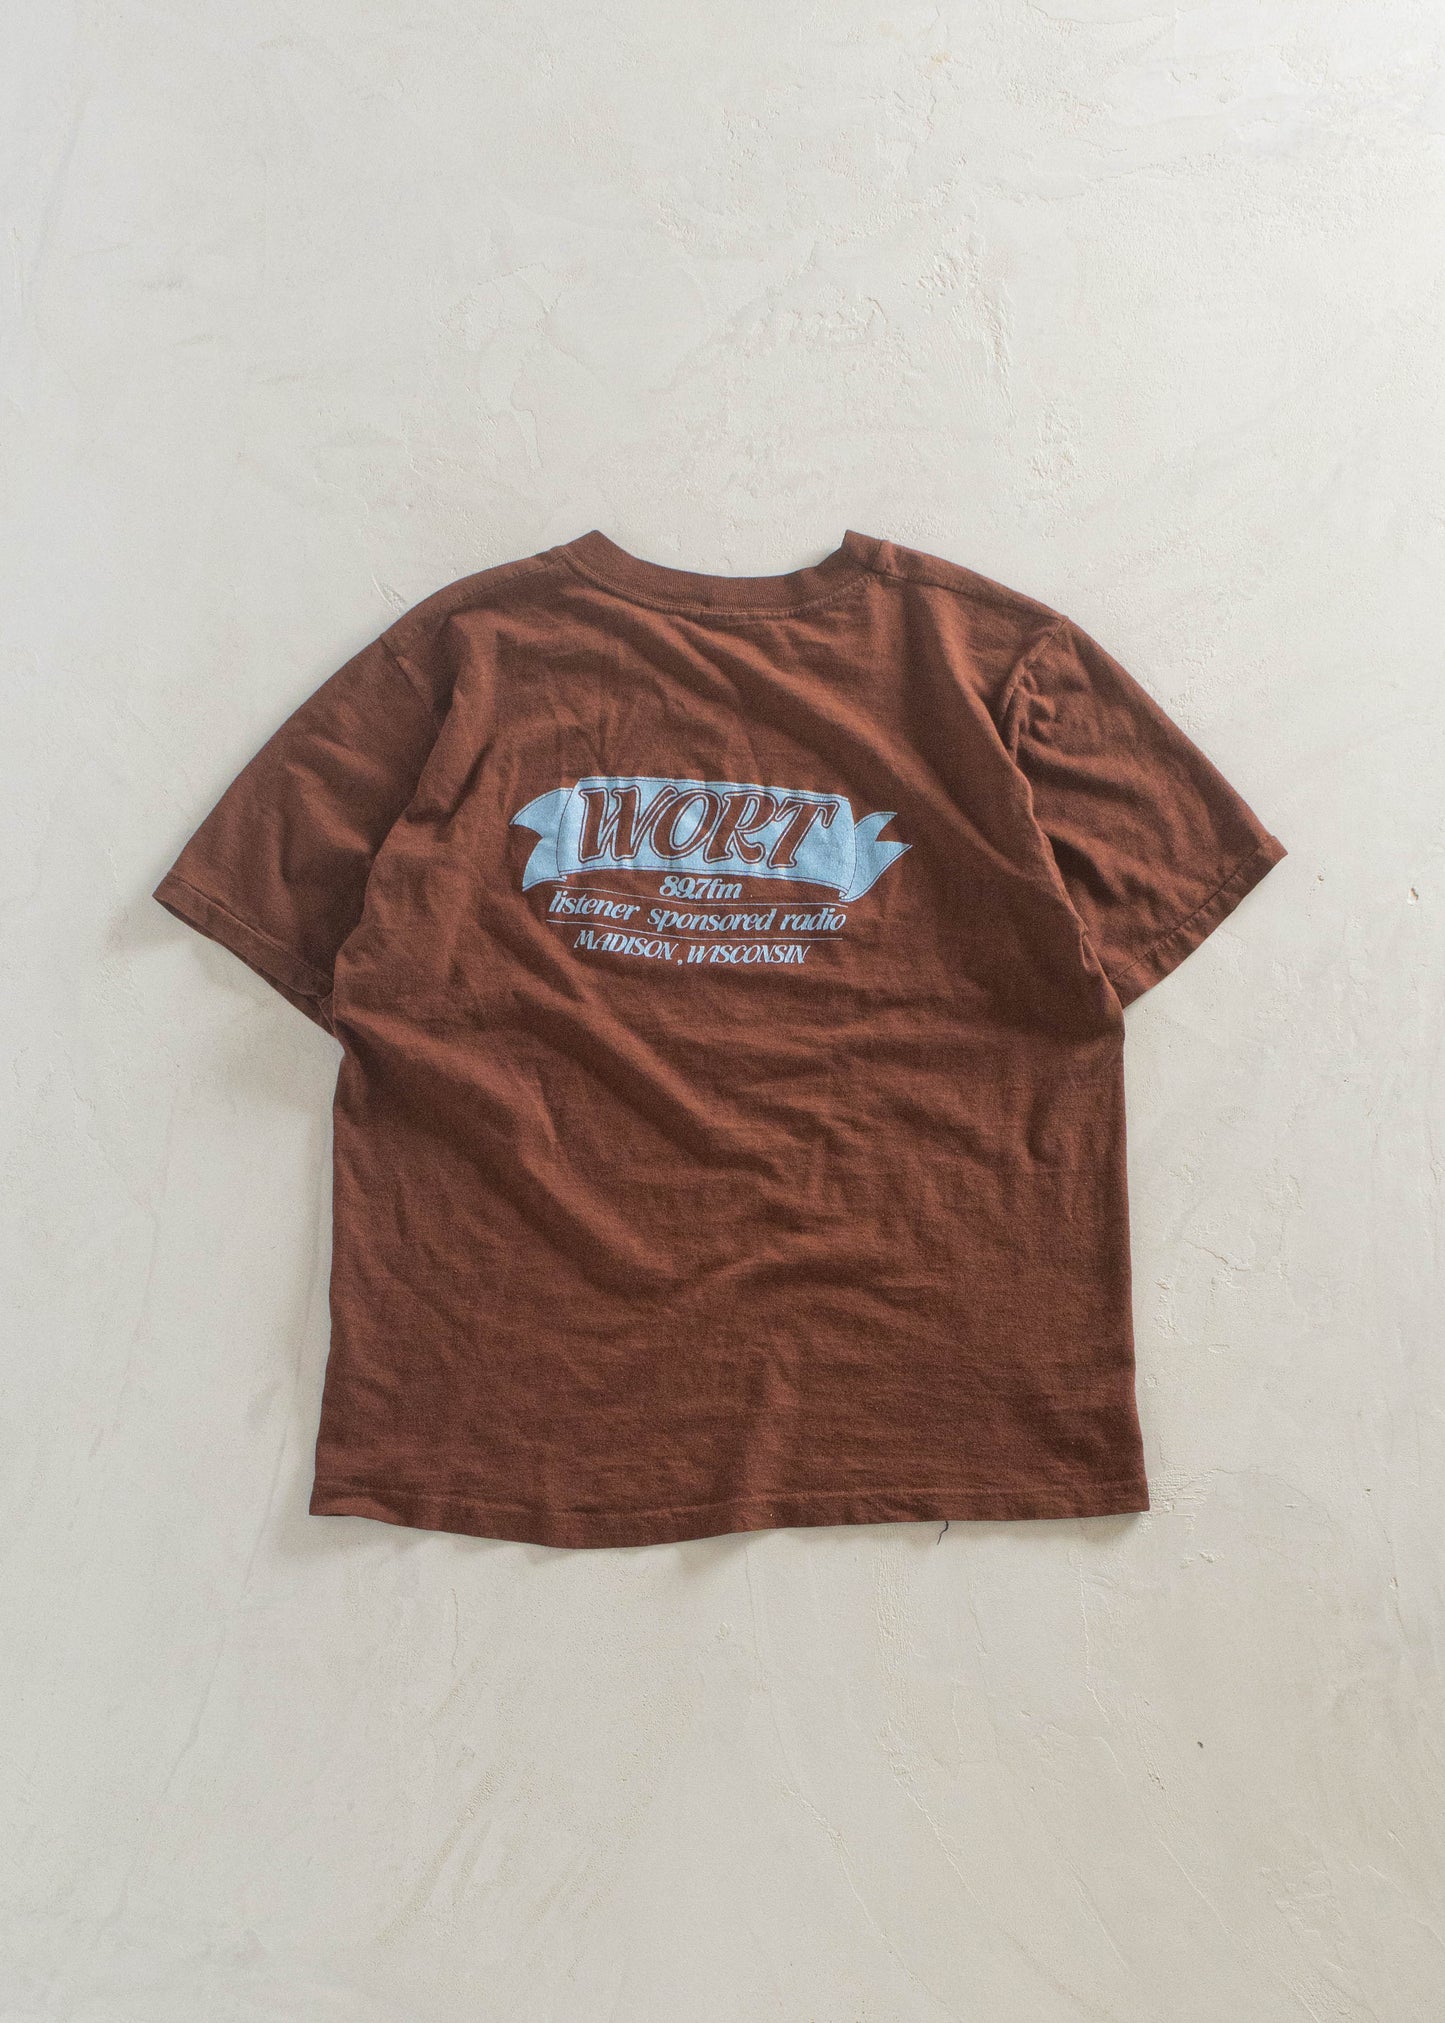 1980s Wisconsin's Dairy Air Souvenir T-Shirt Size S/M